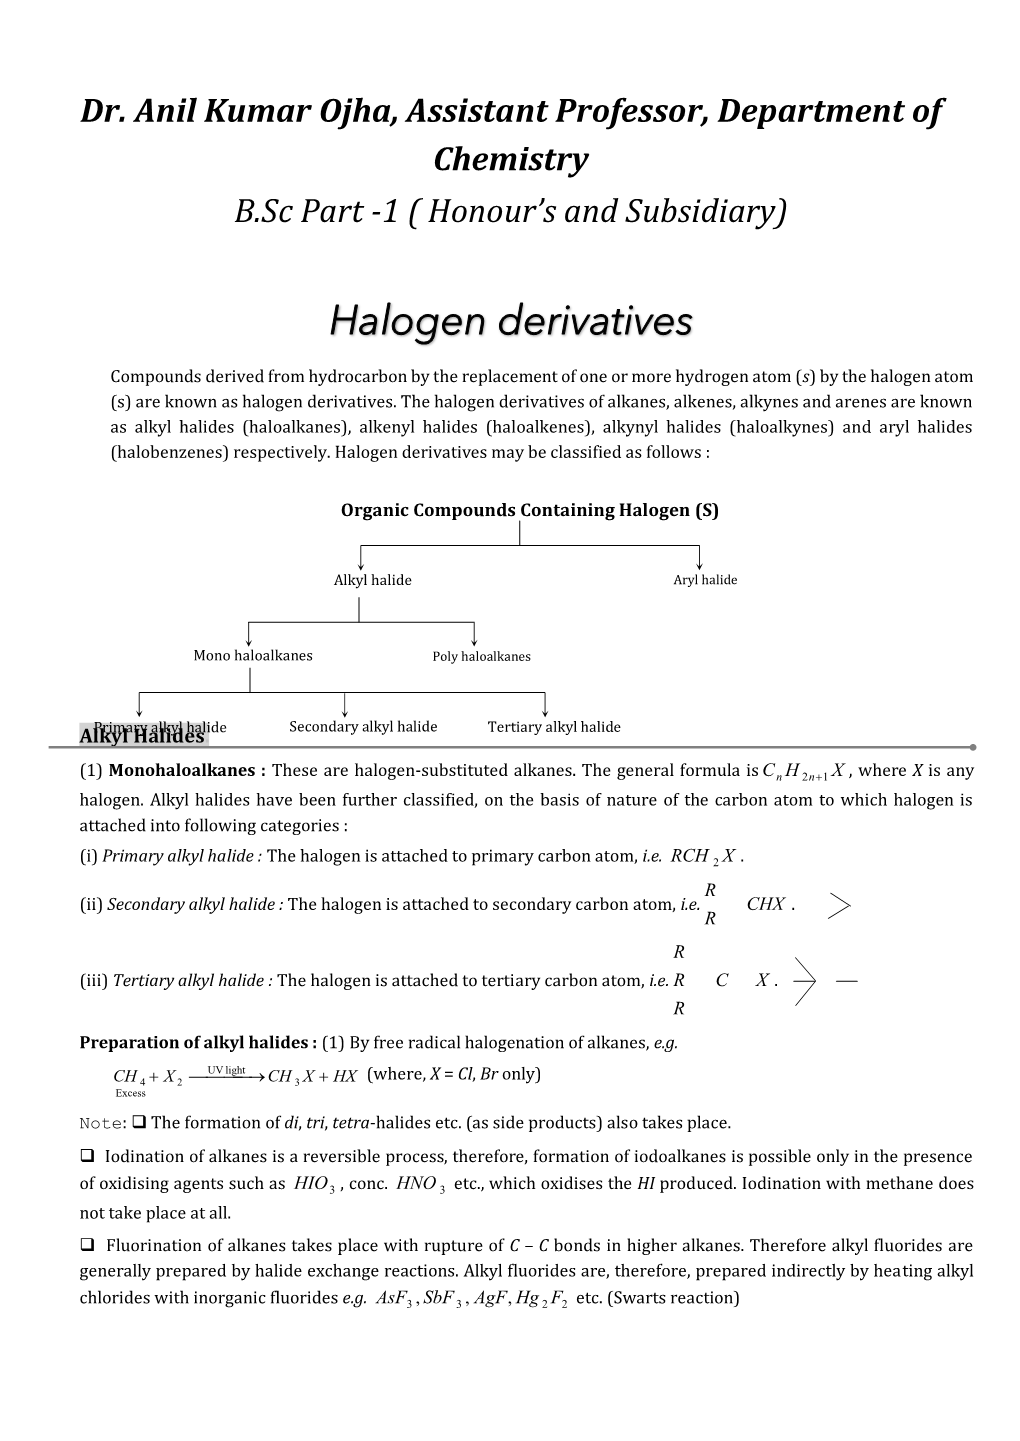 Halogen Derivatives